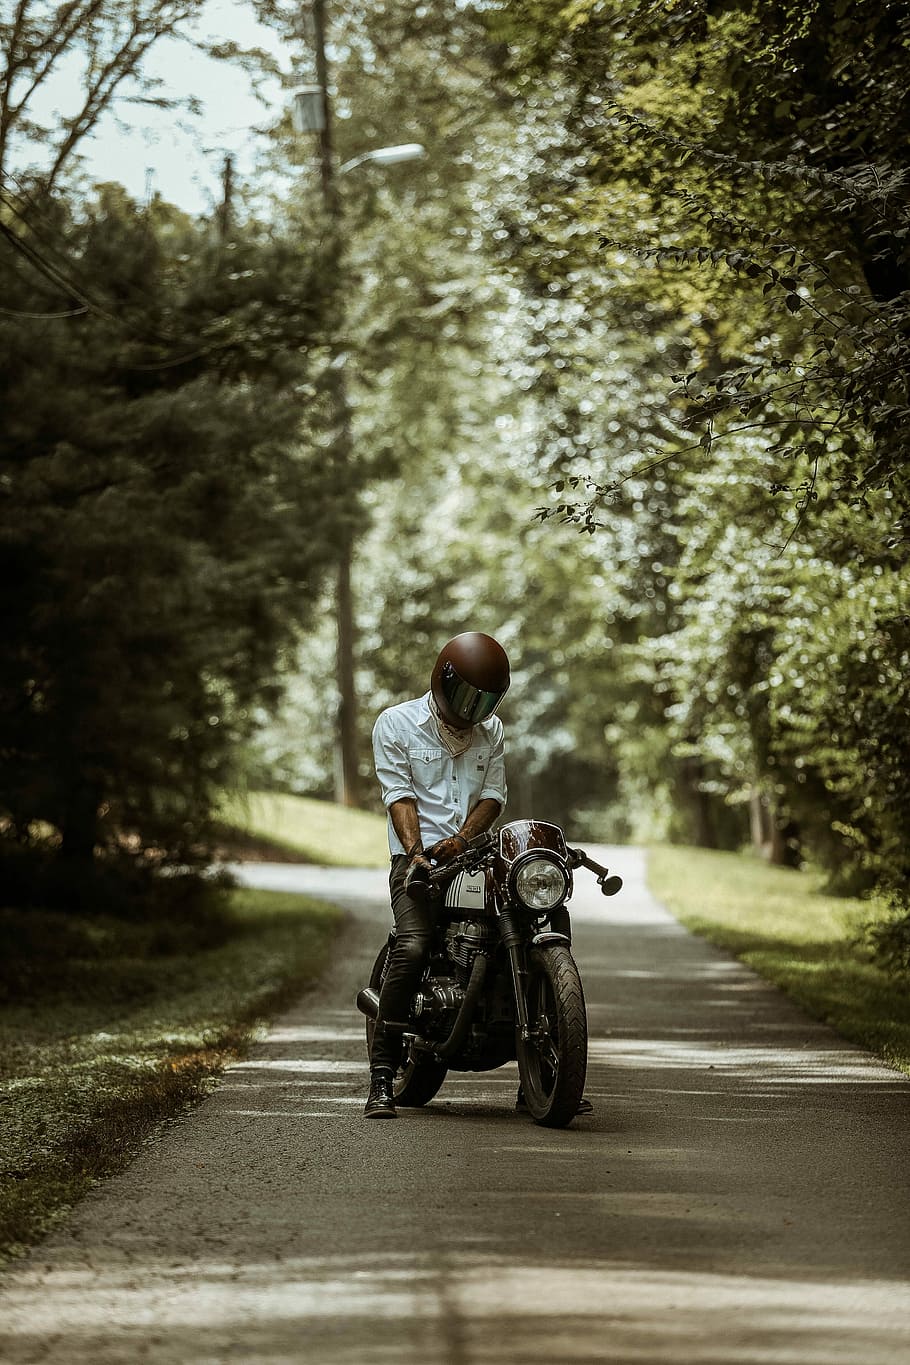 man riding motorcycle on pathway, man wearing full-face helmet while riding motorcycle on asphalt roadway between trees during daytime